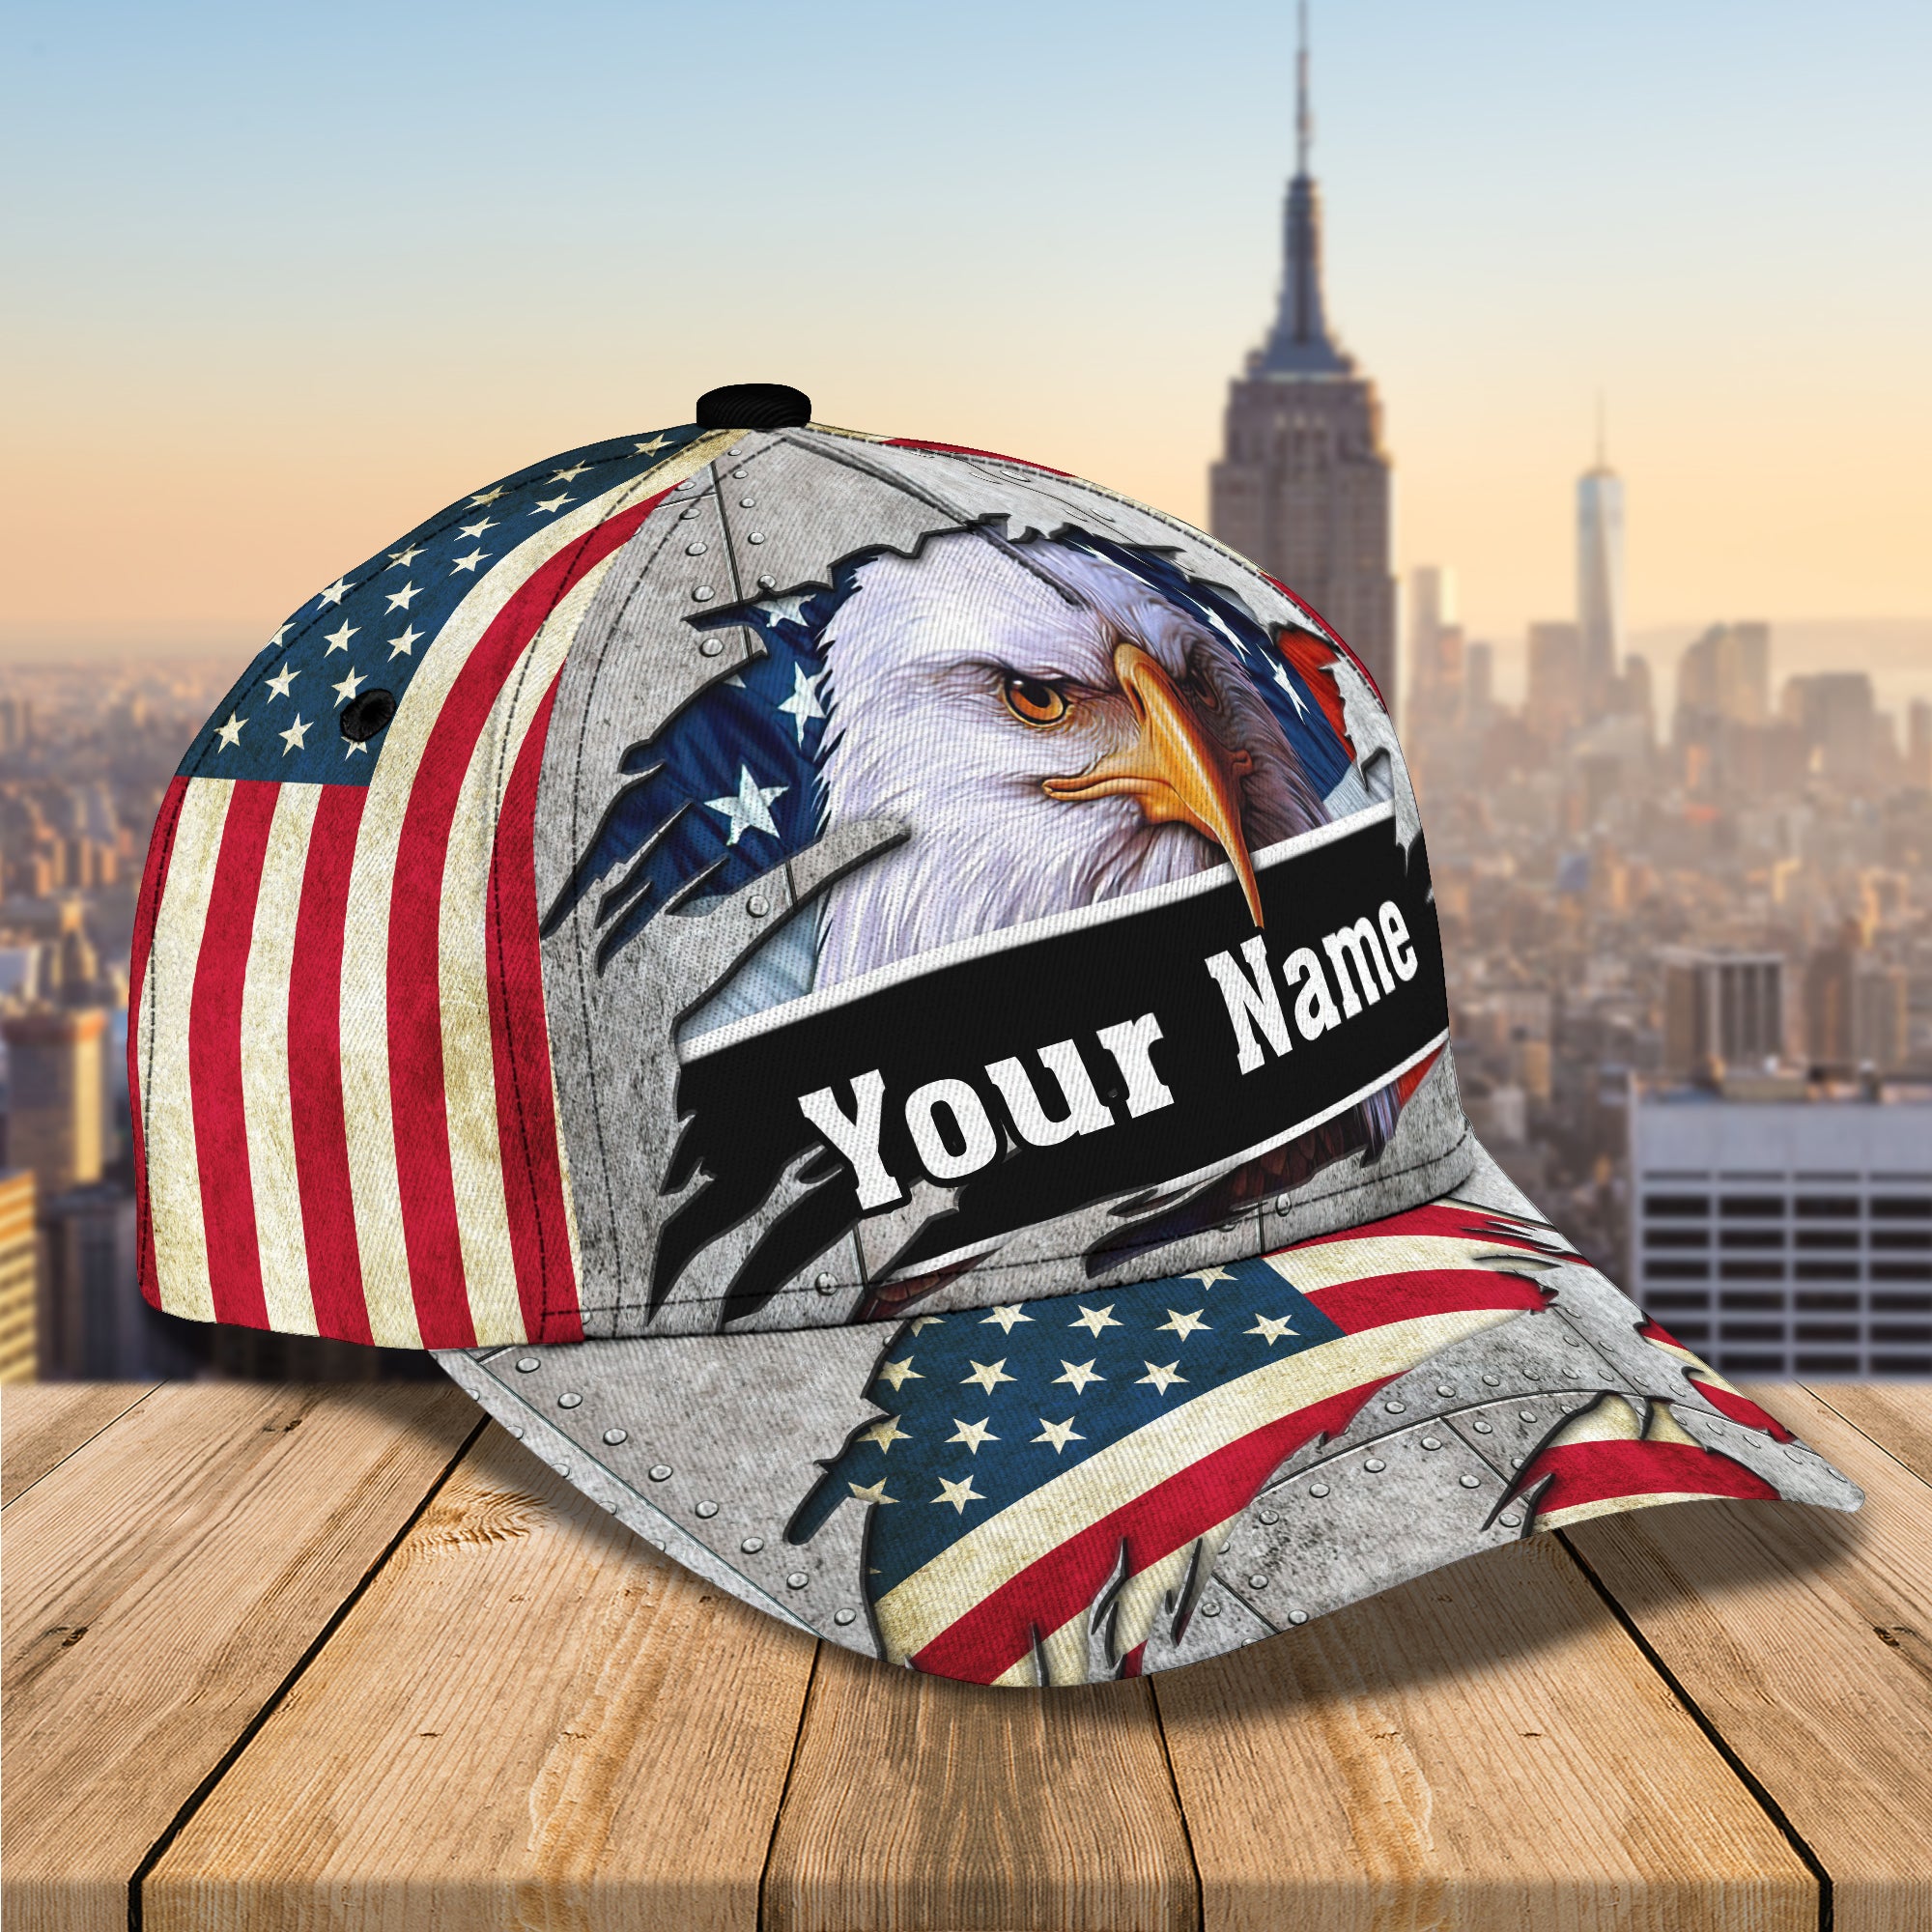 America - Personalized Name Cap - Hadn